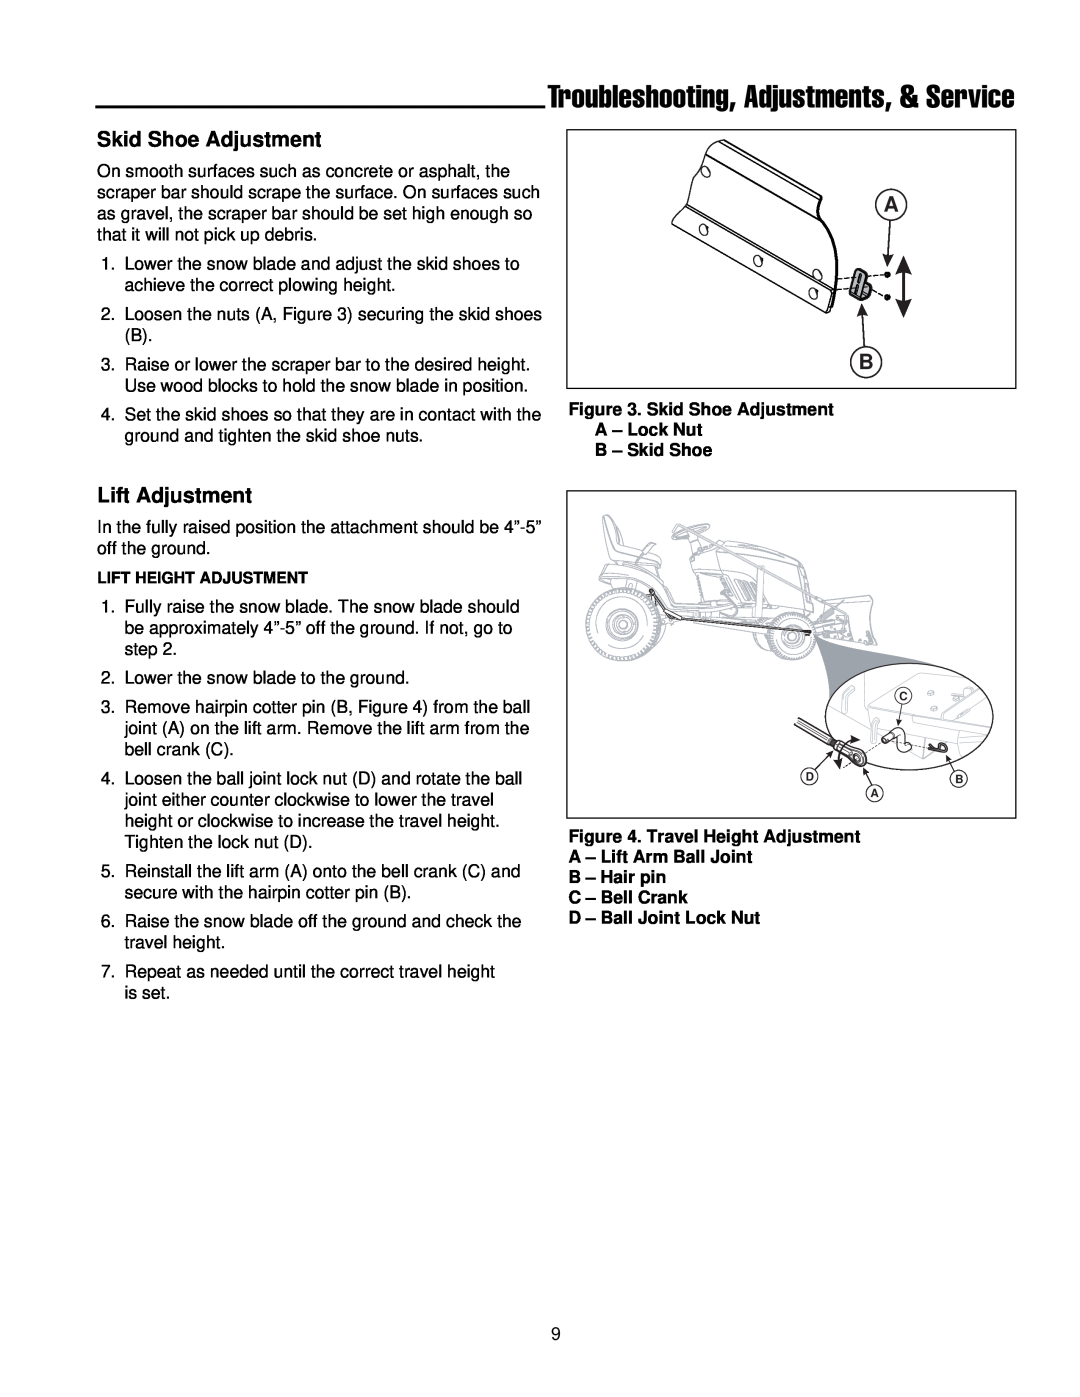 Briggs & Stratton 1694919 manual Skid Shoe Adjustment, Lift Adjustment, Troubleshooting, Adjustments, & Service 